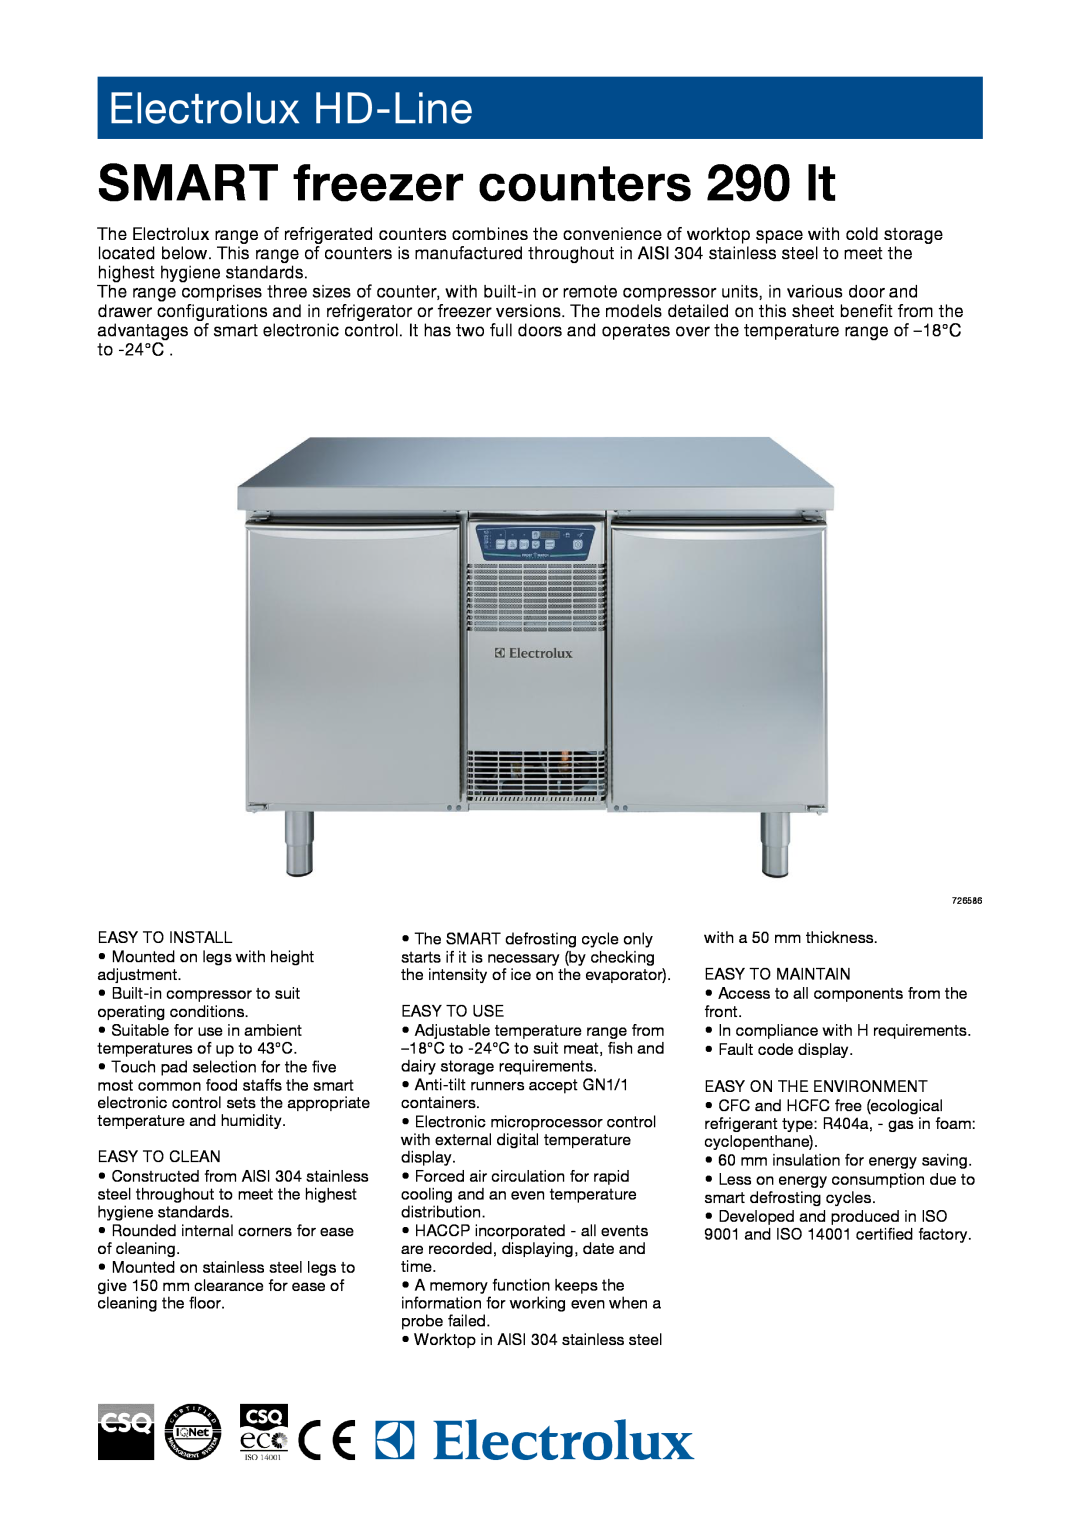 Electrolux RCEF2M2, 726586 manual SMART freezer counters 290 lt, Electrolux HD-Line 